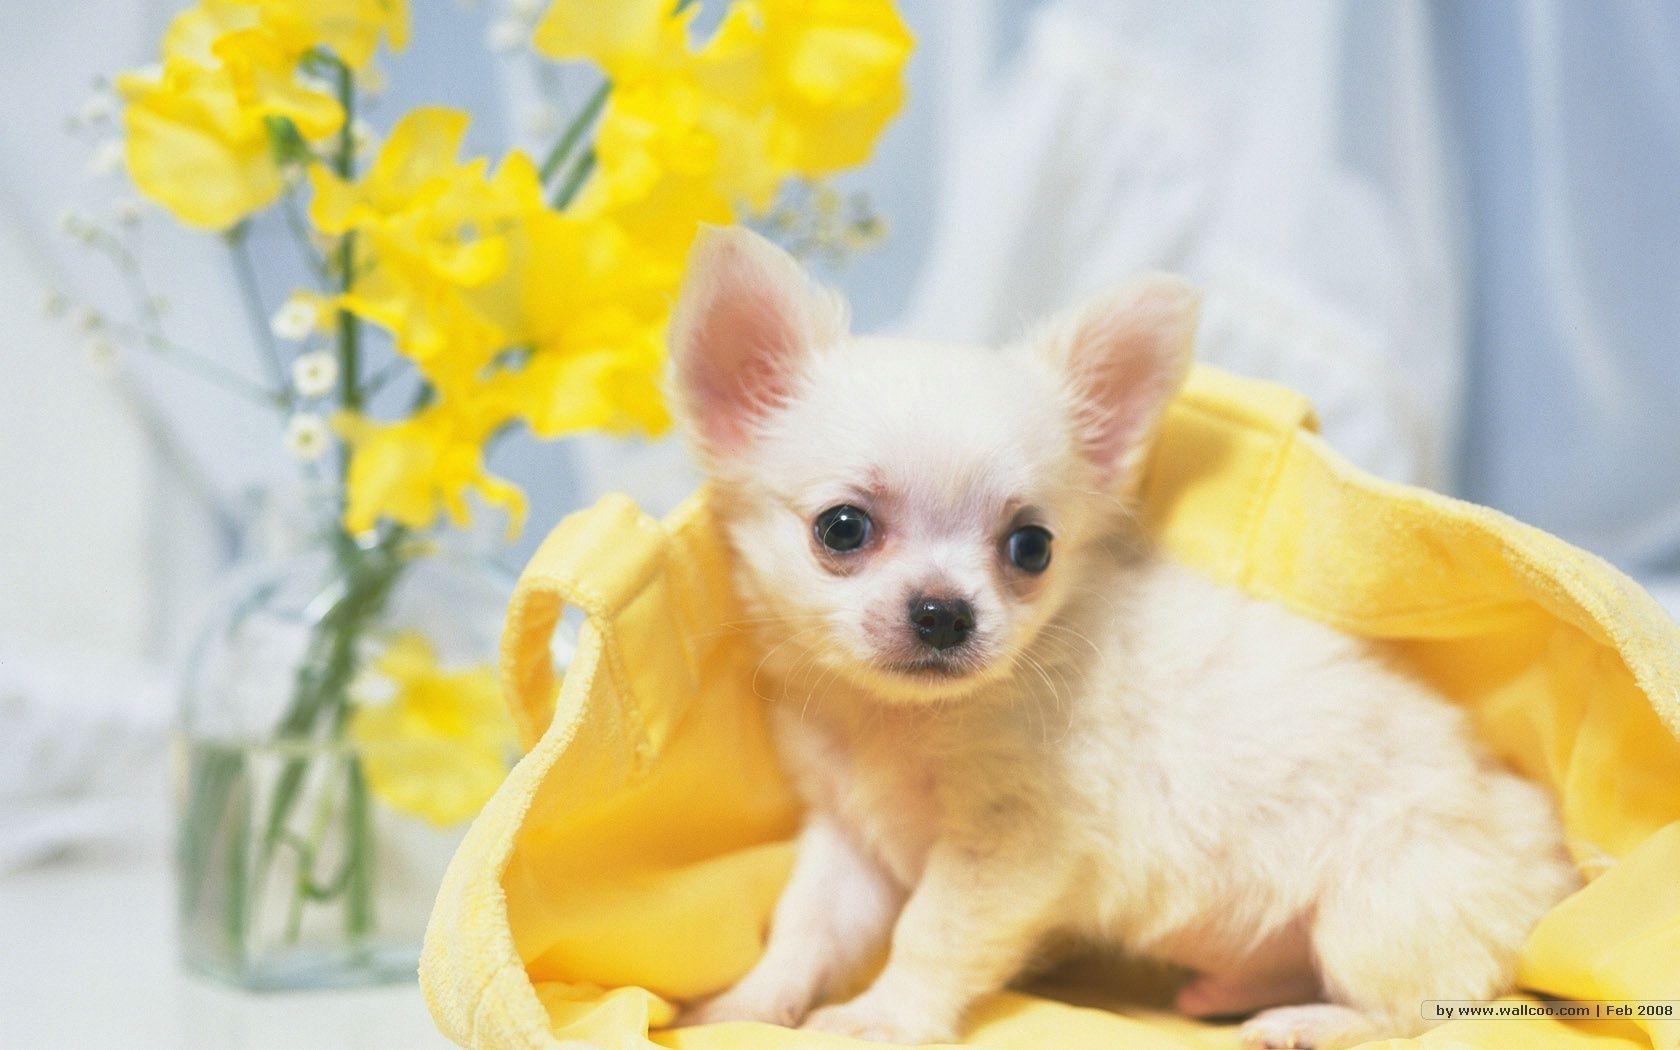 Gallery For: Chihuahua Dog Wallpaper, Chihuahua Dog Wallpaper